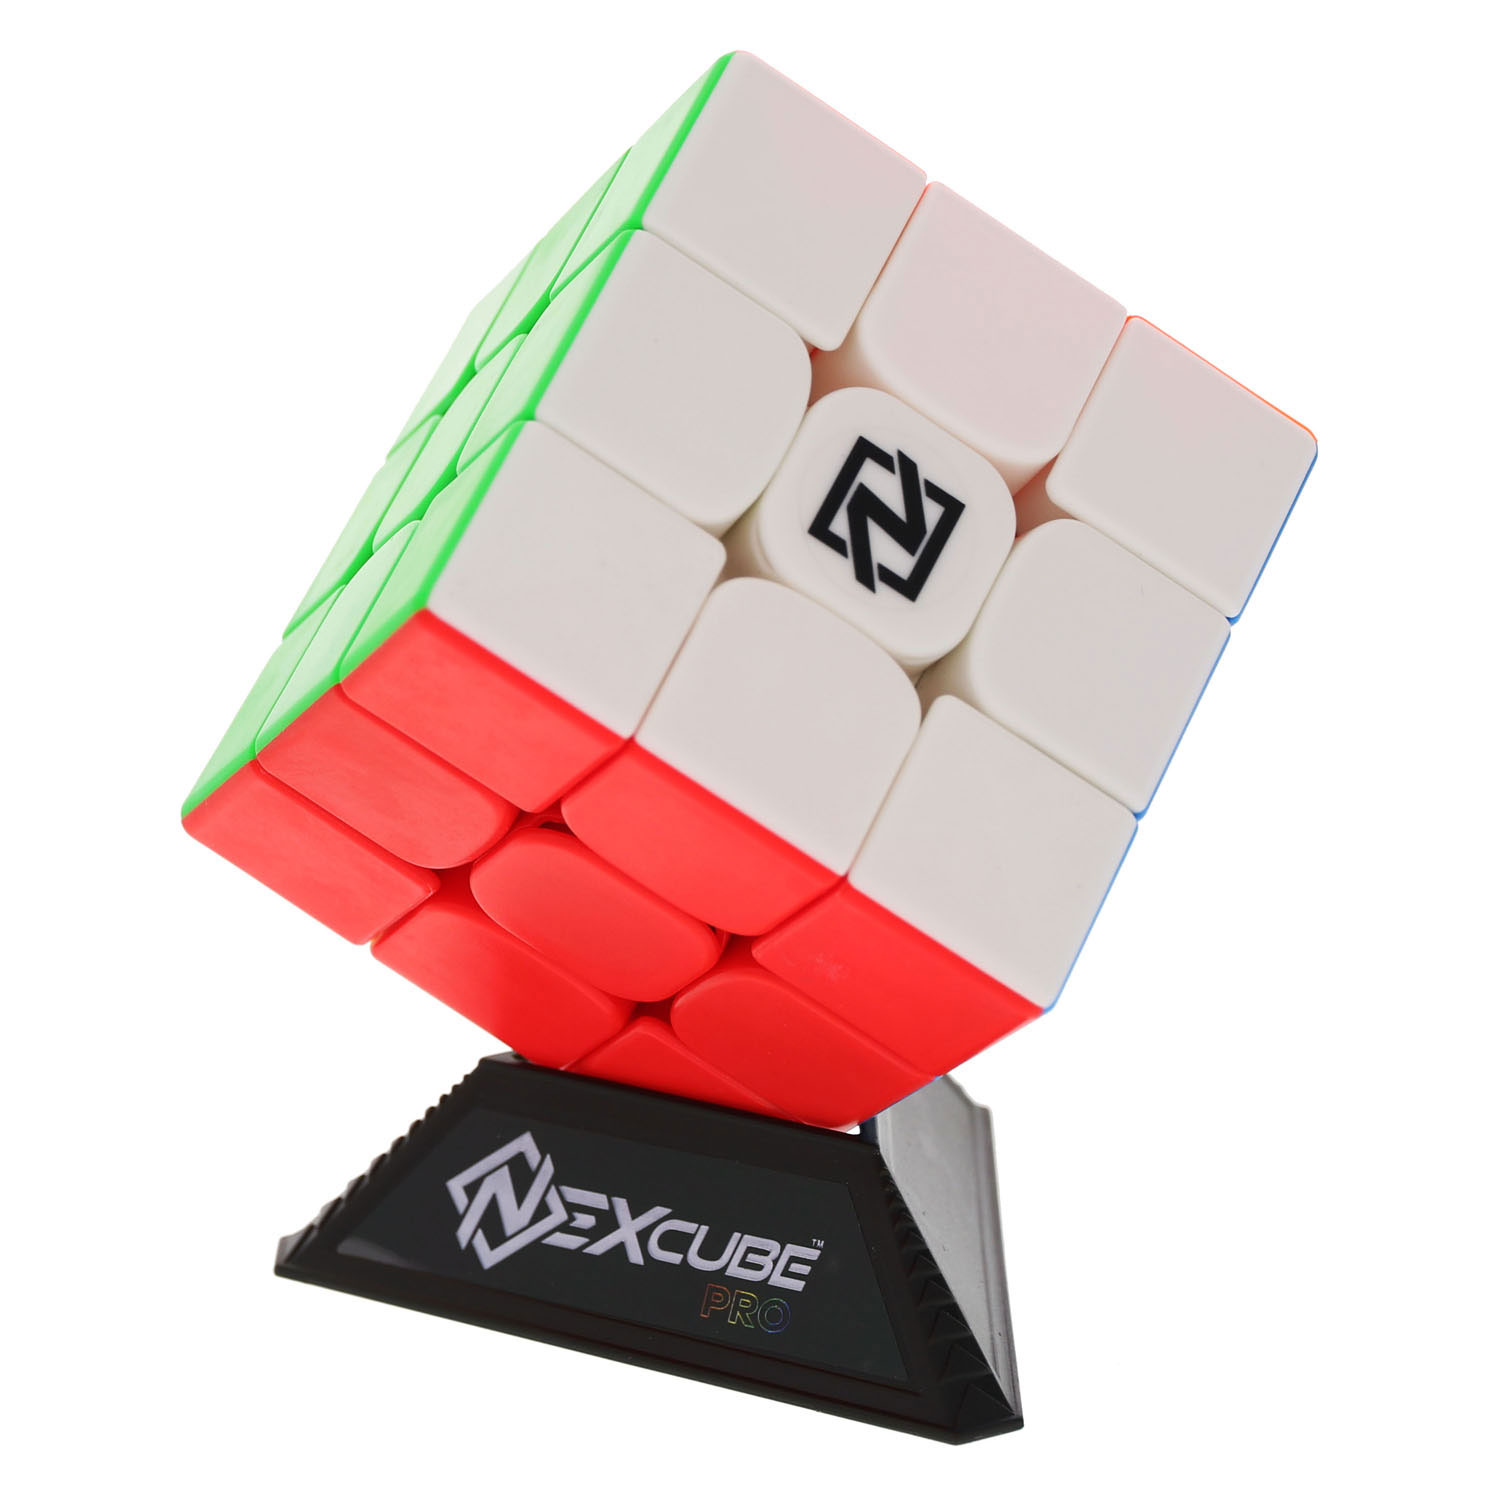 Nexcube Pro Cube - Breinpuzzel